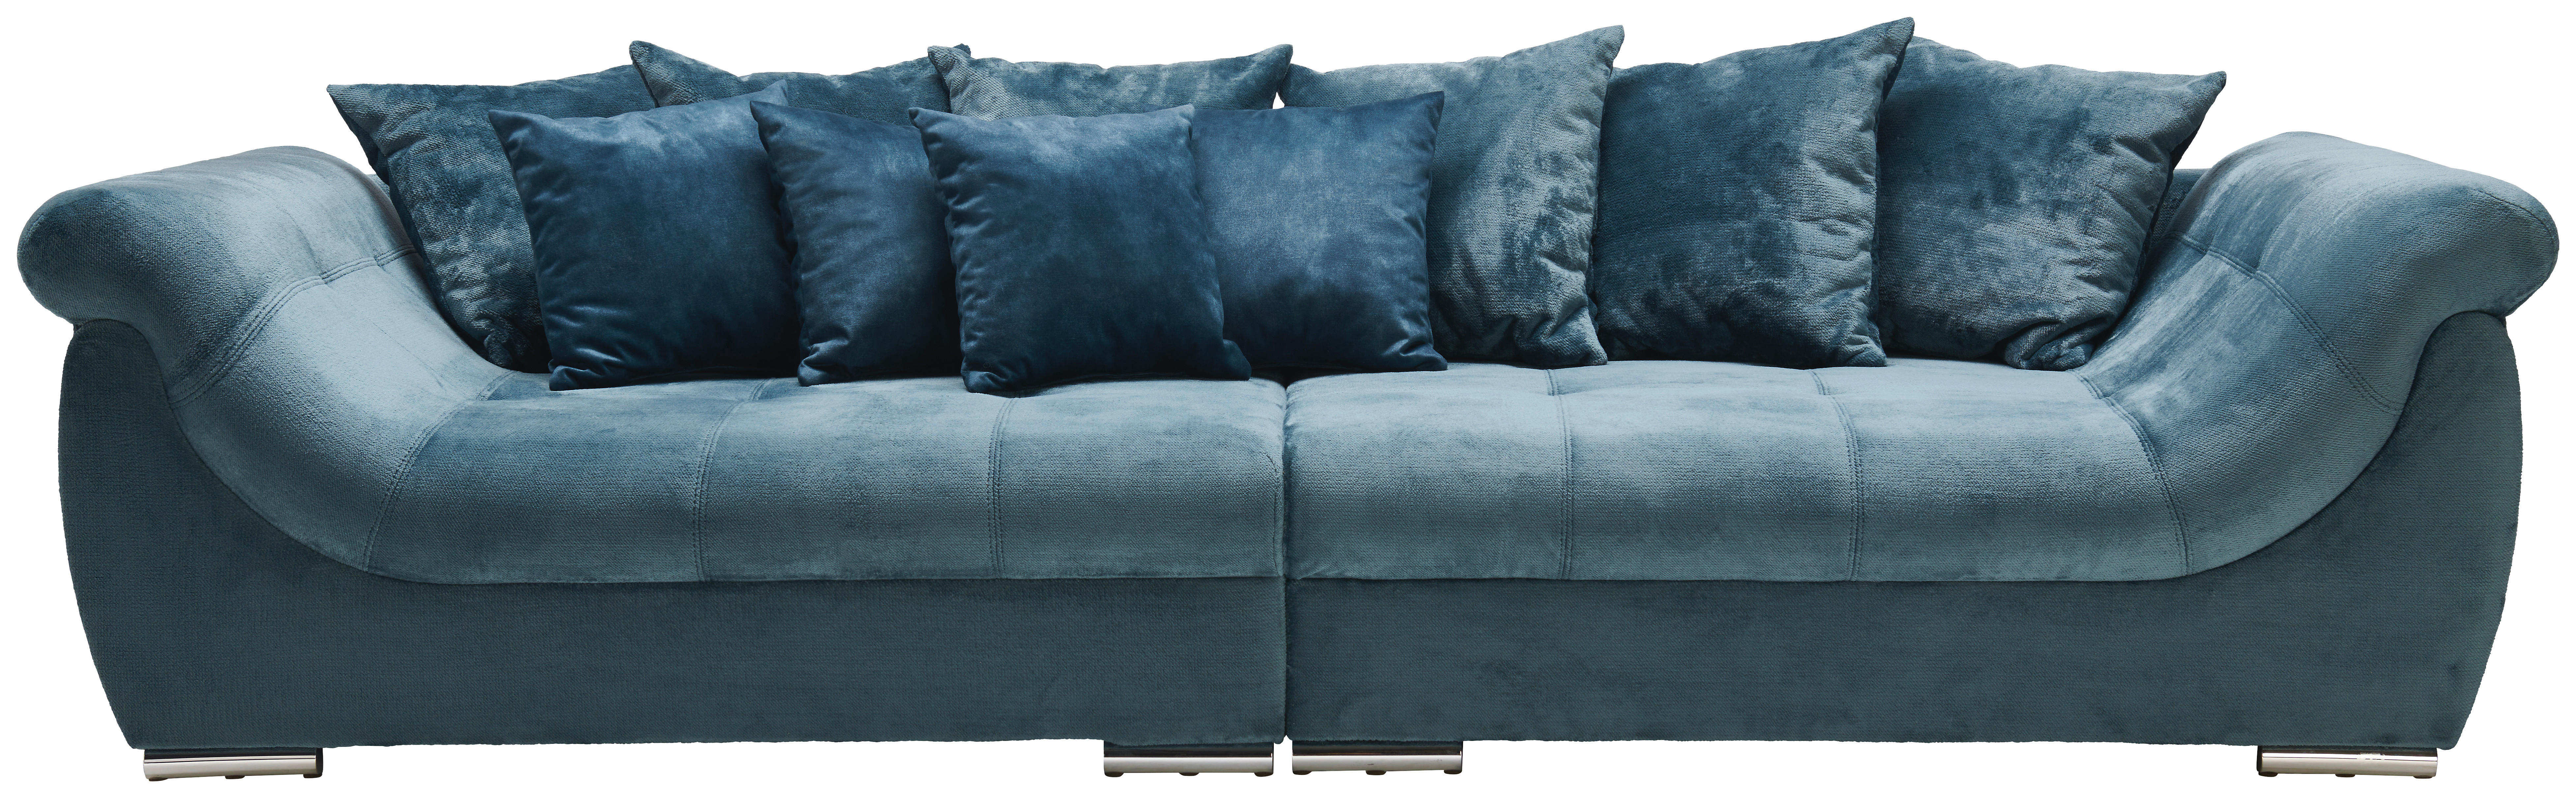 BIGSOFA in Velours Blau  - Blau/Silberfarben, Design, Kunststoff/Textil (296/85/116cm) - Carryhome